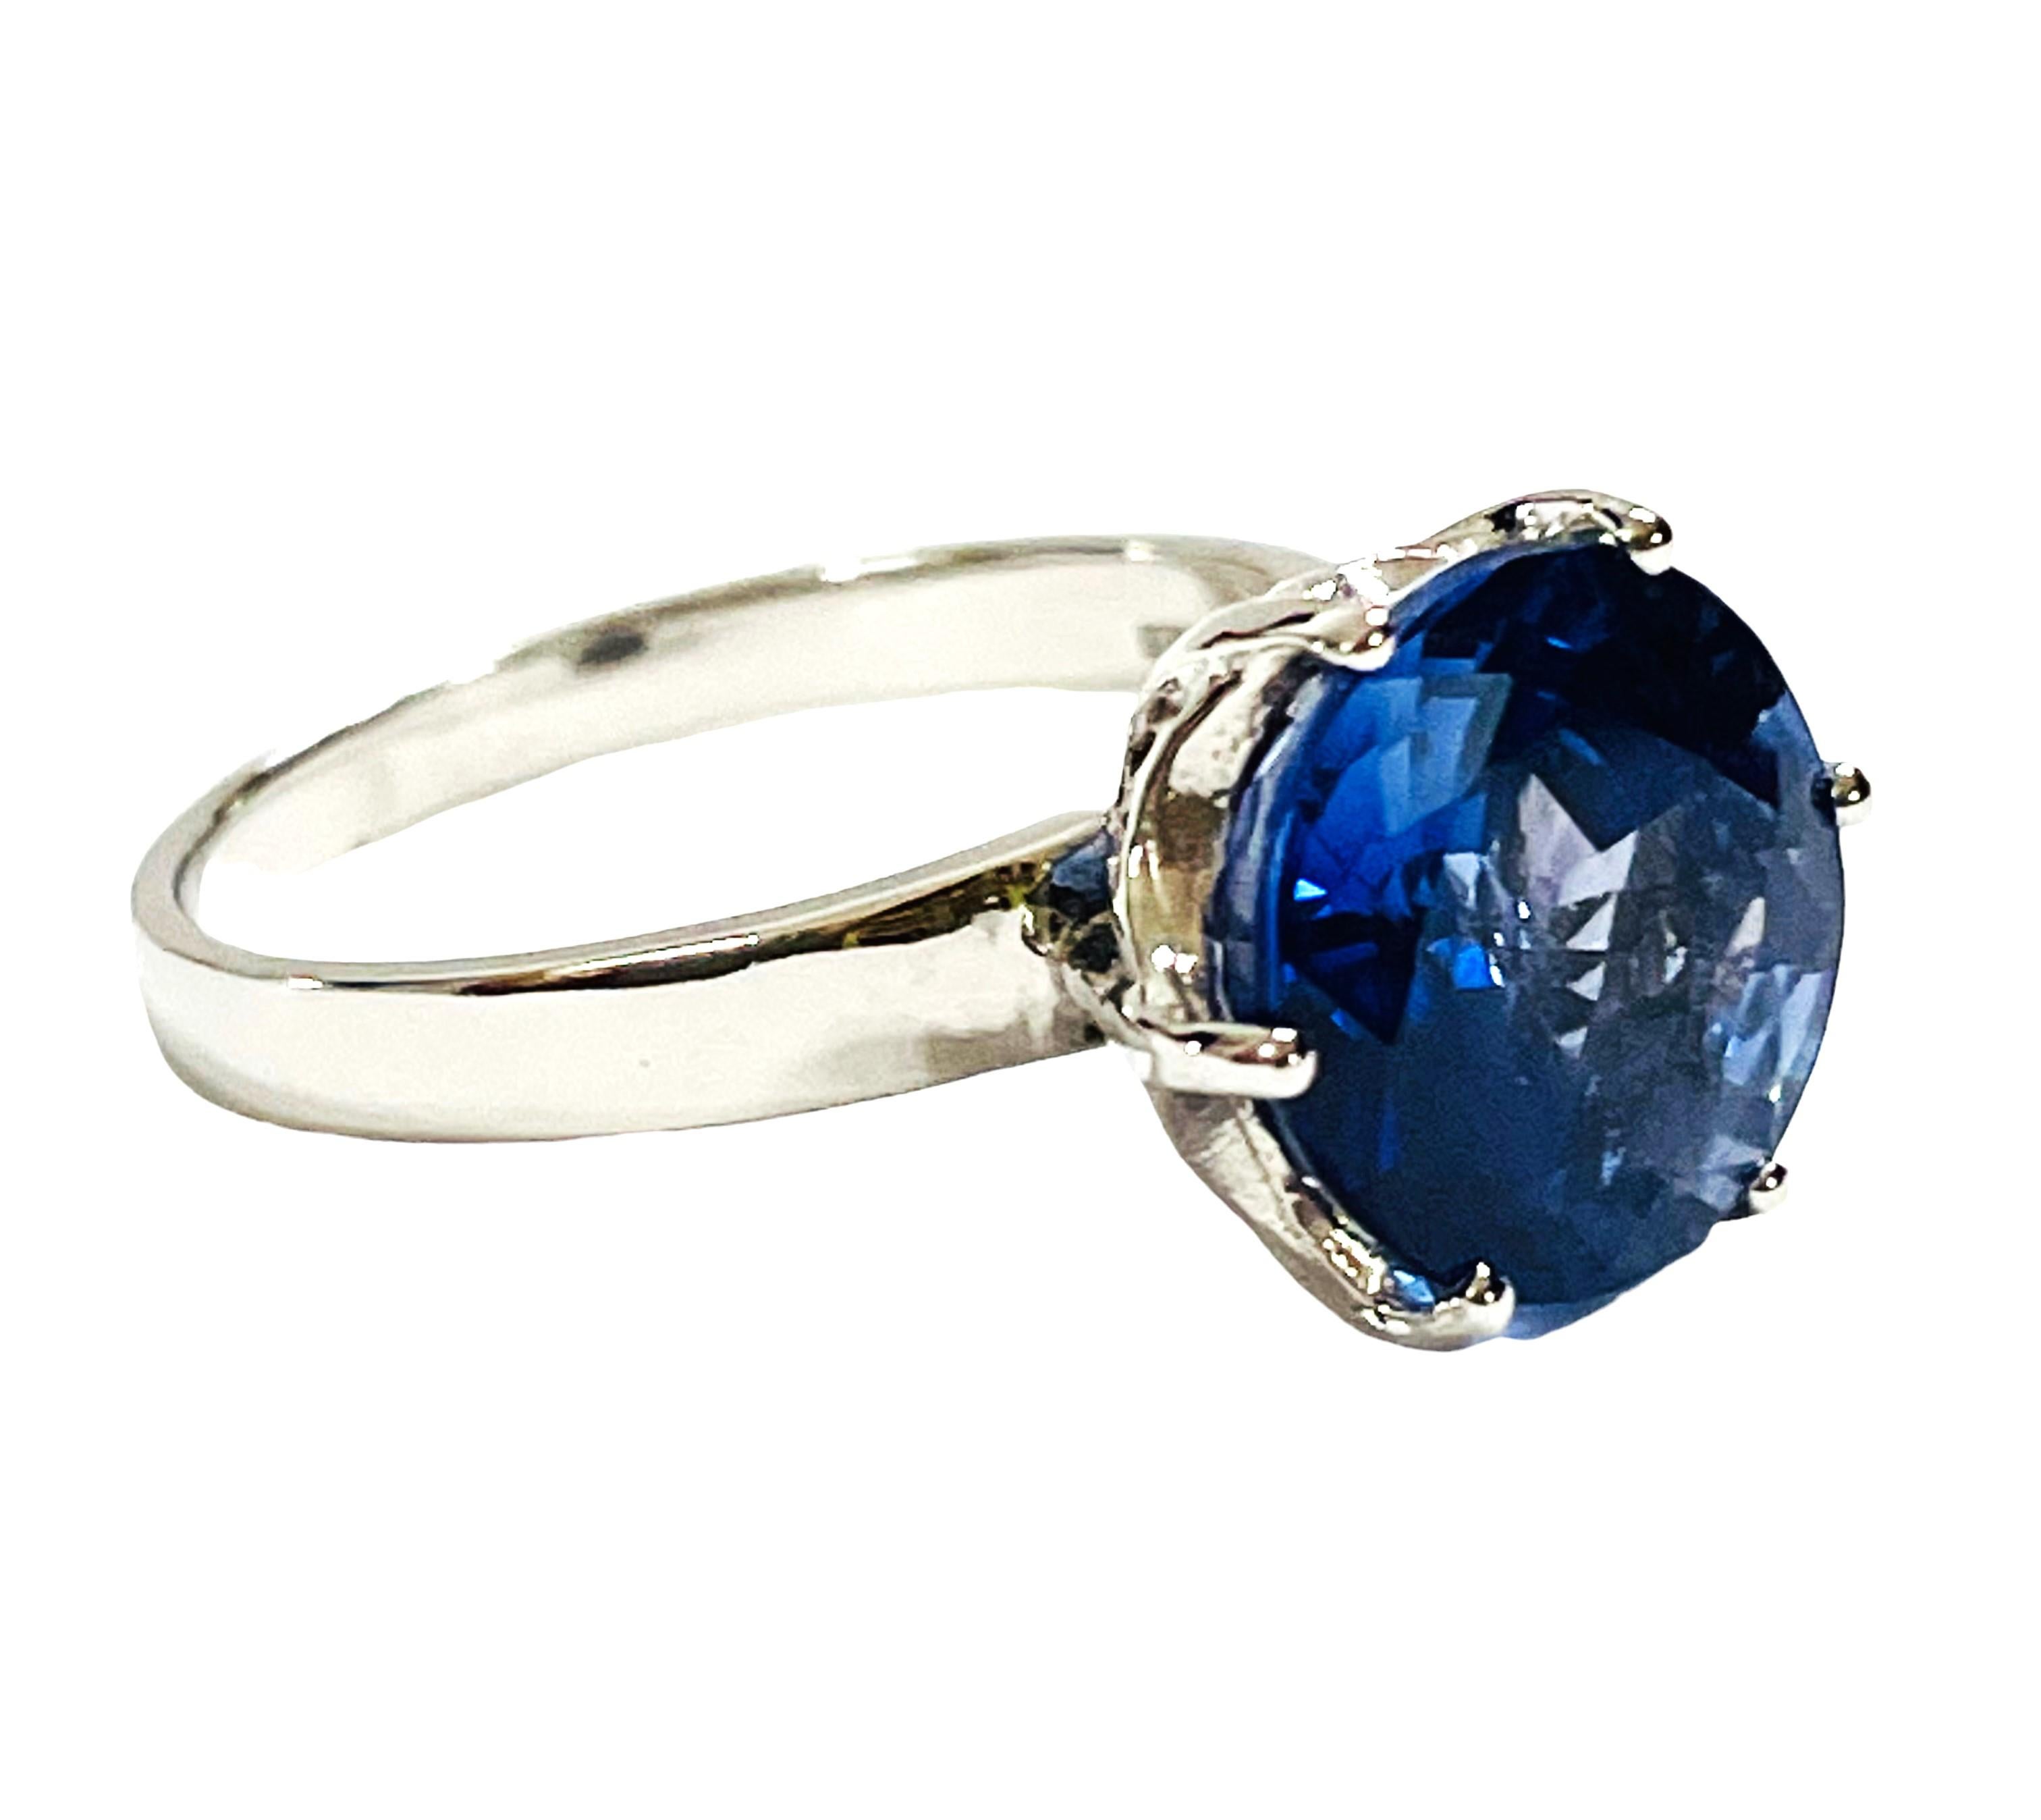 Mixed Cut New African Kashmir Blue Sapphire 4.4 Carat Sterling Silver Ring